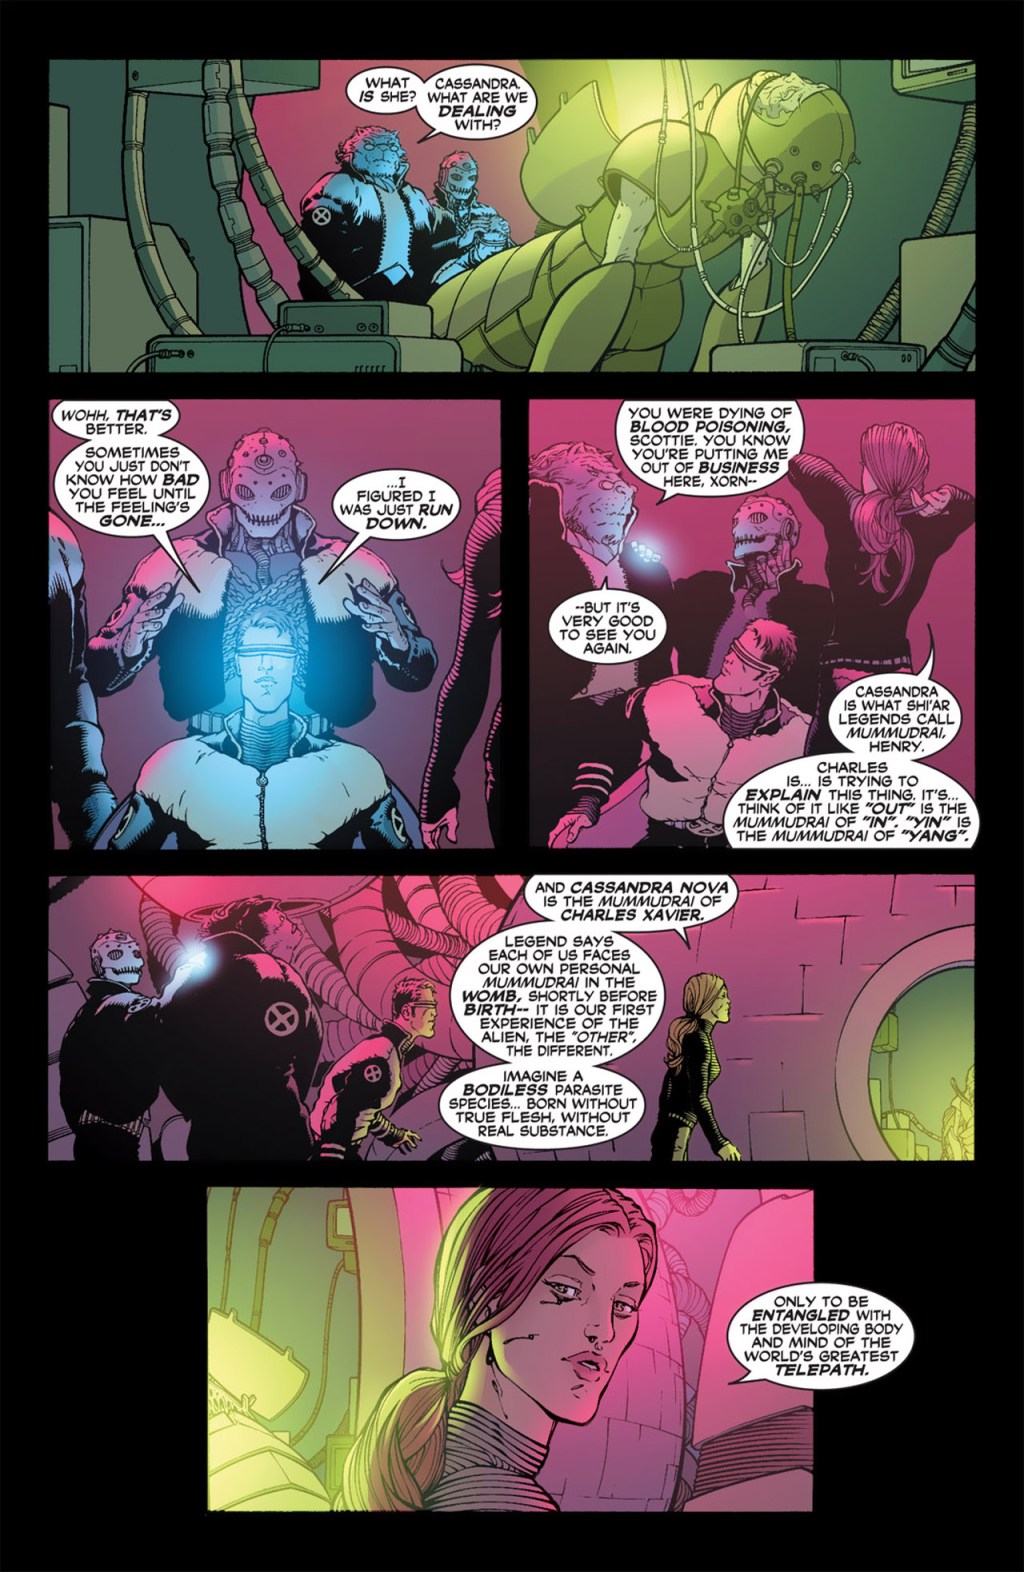 Jean Grey reveals the origins of Cassandra Nova in New X-Men Vol. 1 #126 "All Hell" (2002), Marvel Comics. Words by Grant Morrison, art by Frank Quitely, Tim Townsend, Brian Haberlin, Richard Starkings, and Saida Temofonte.